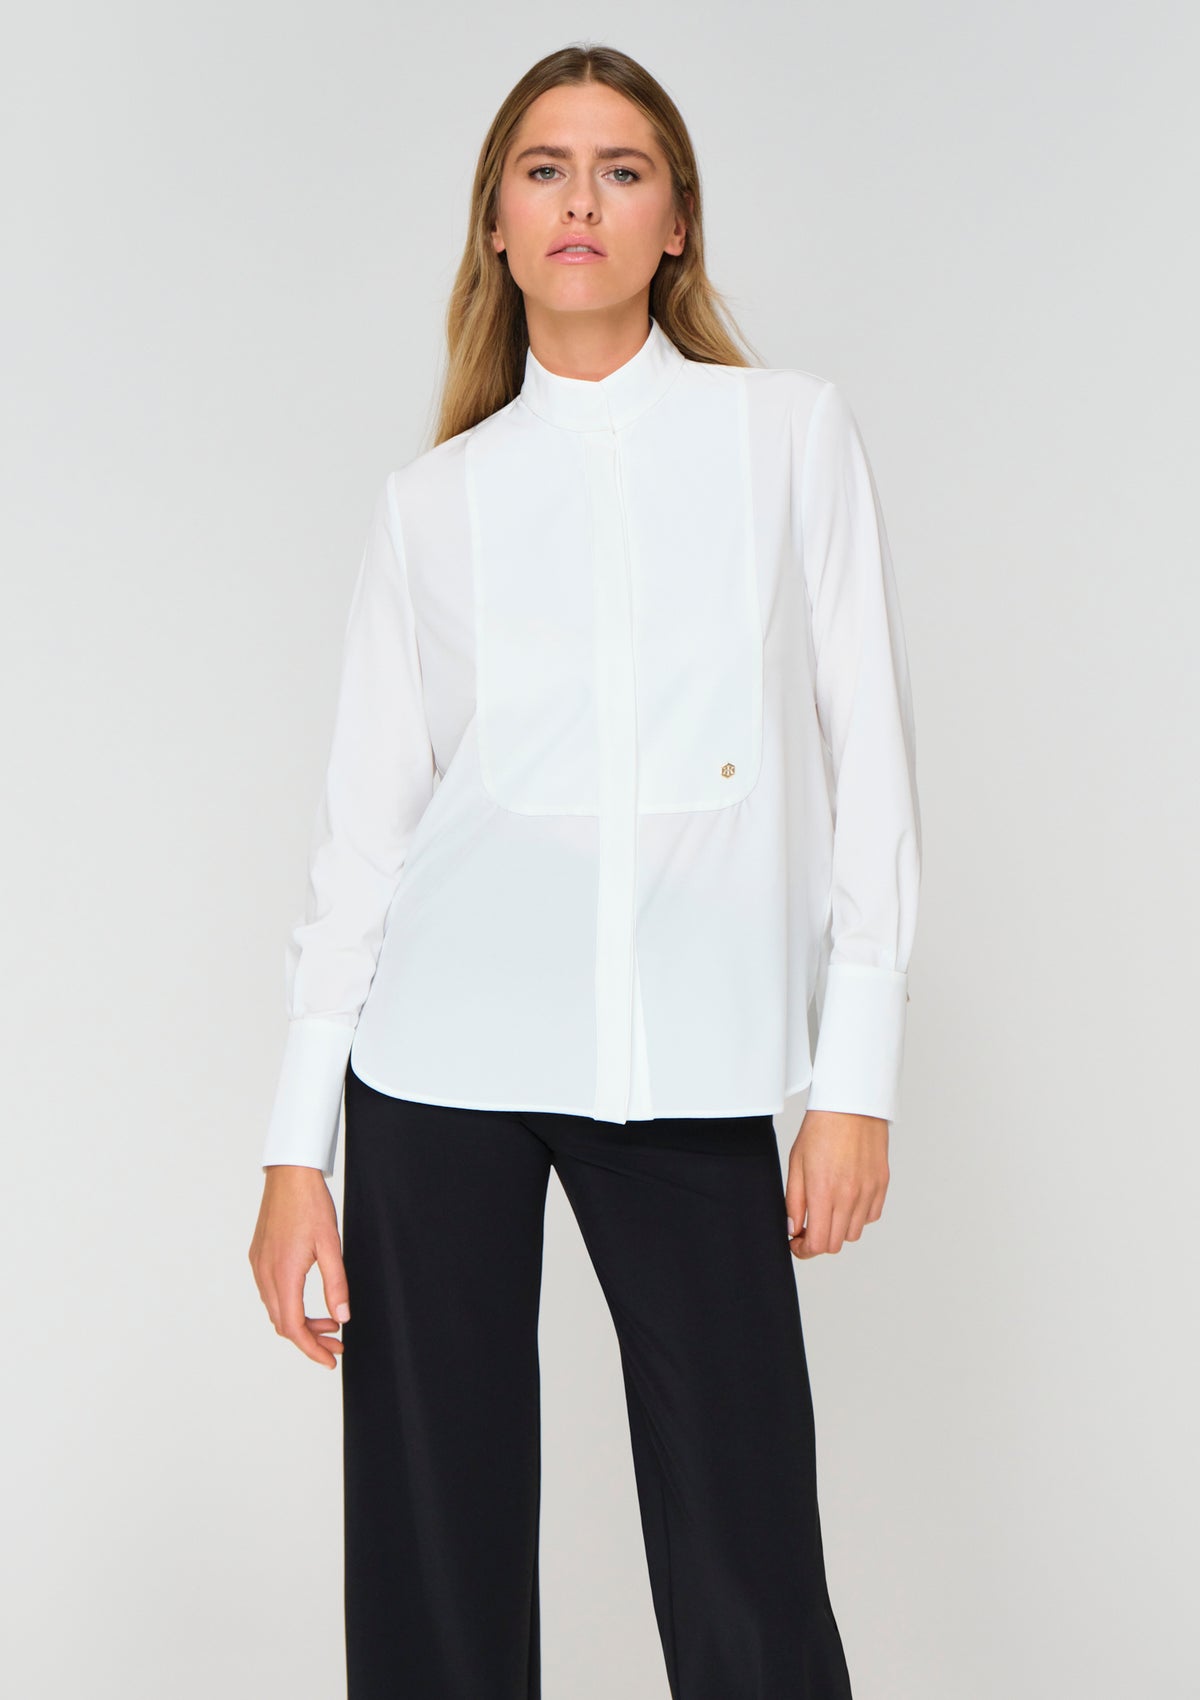 SELEN blouse white